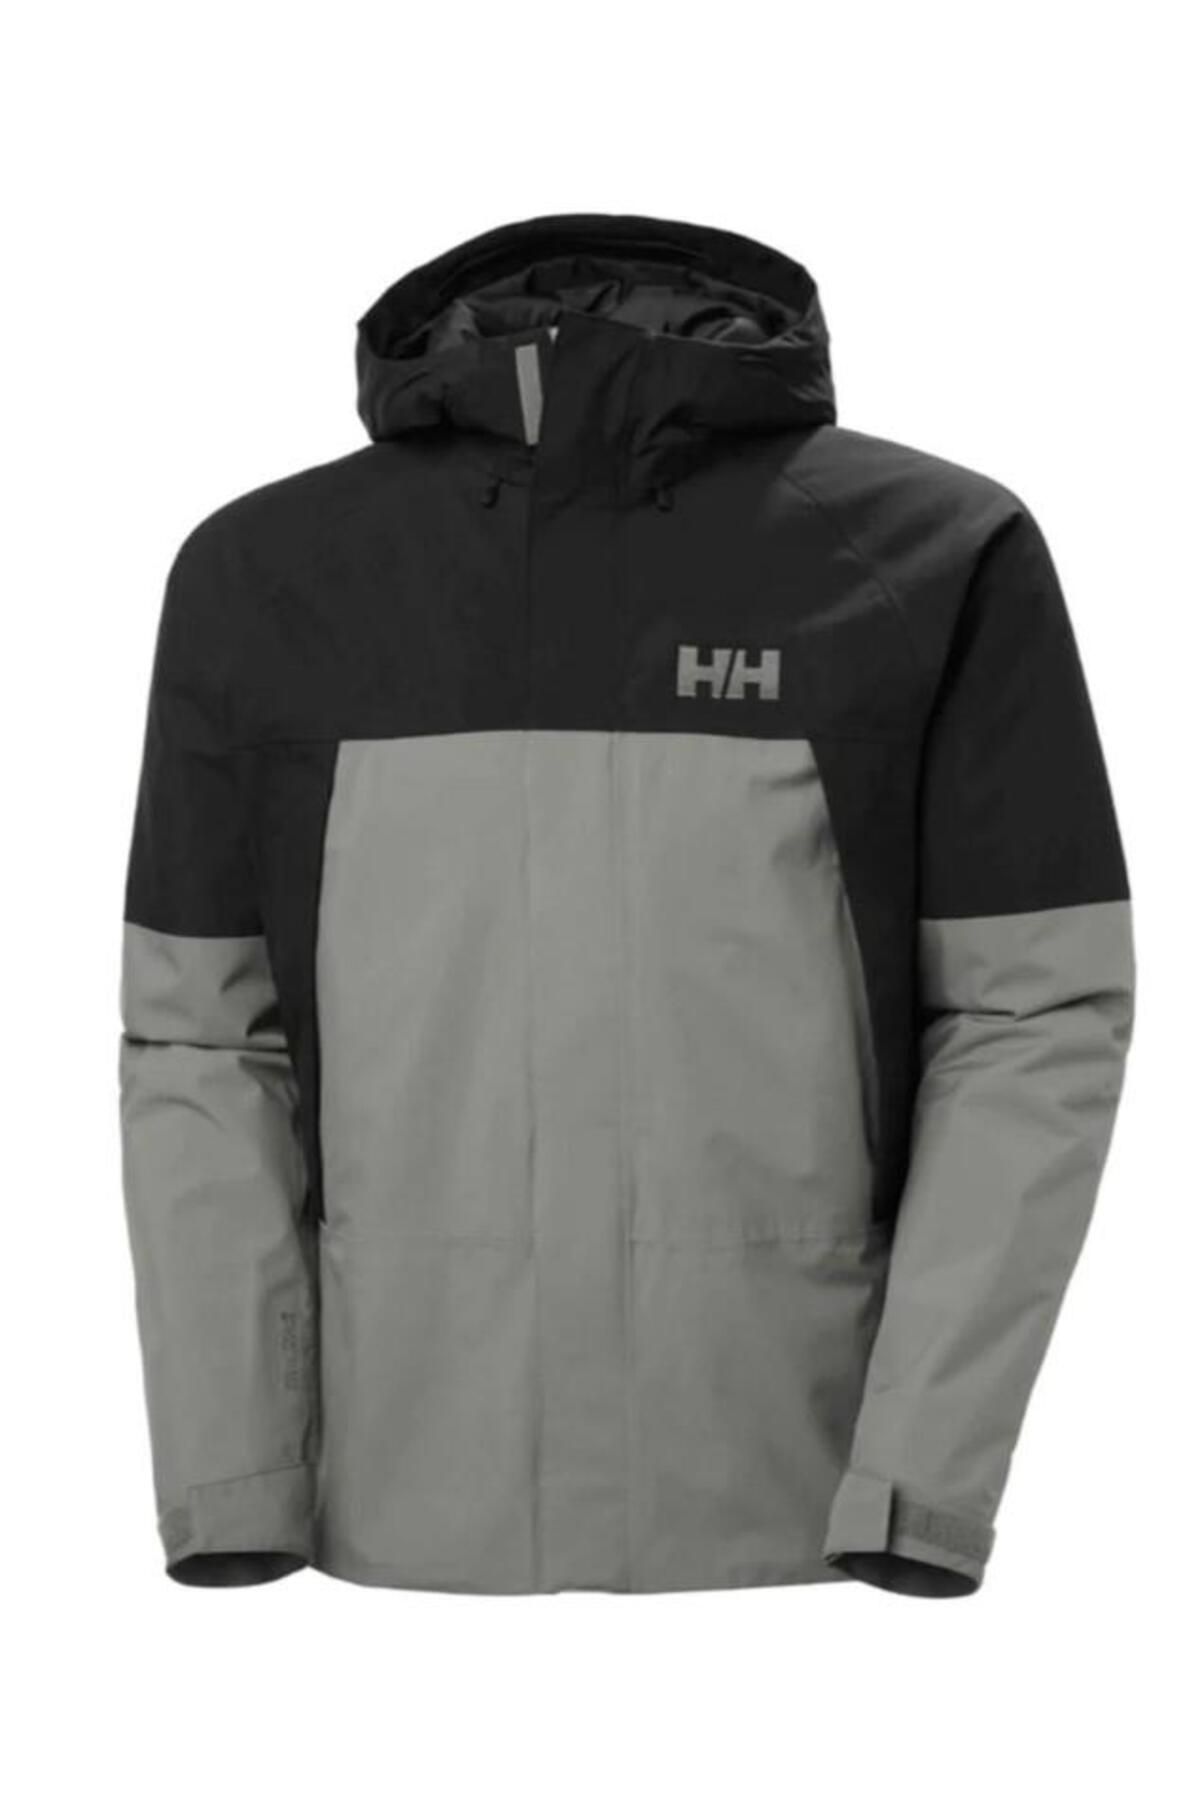 Helly Hansen Banff Insulated Shell Jacket